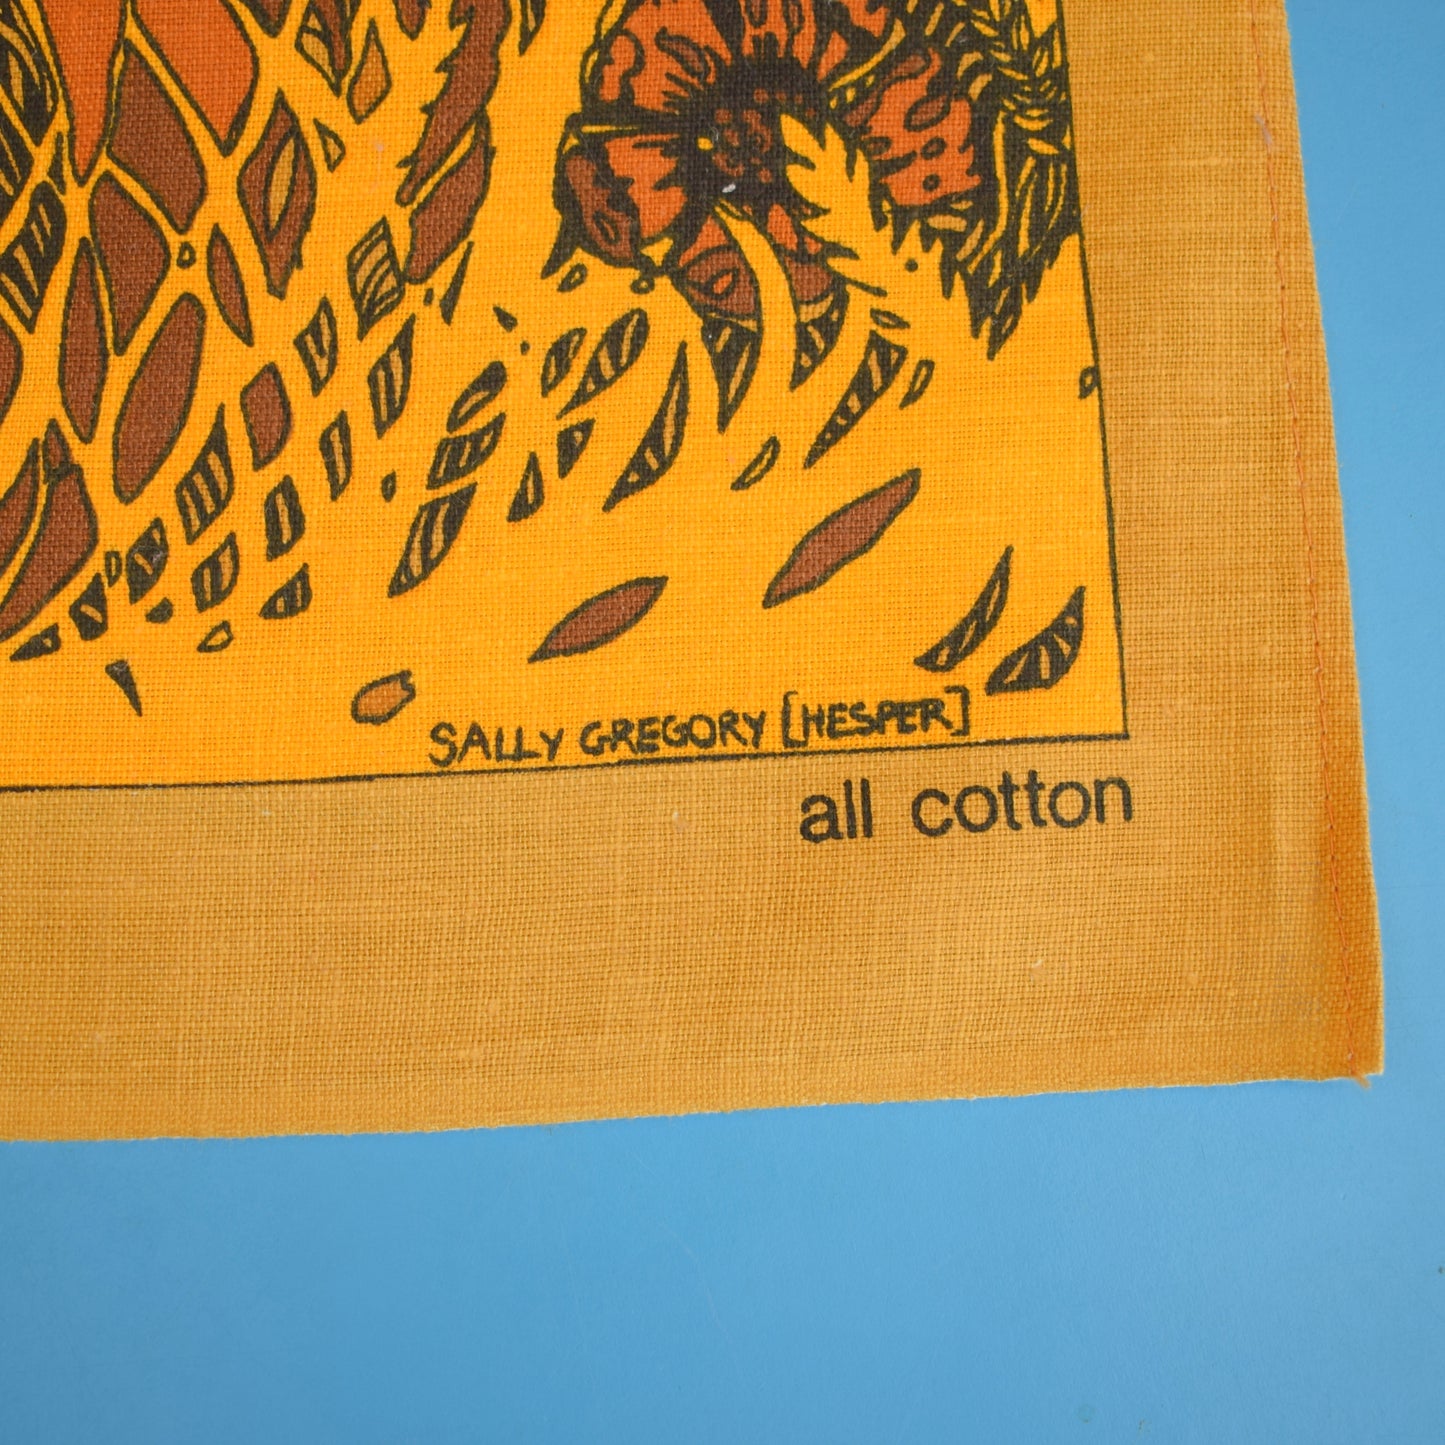 Vintage 1970s Tea Towel - Sally Gregory